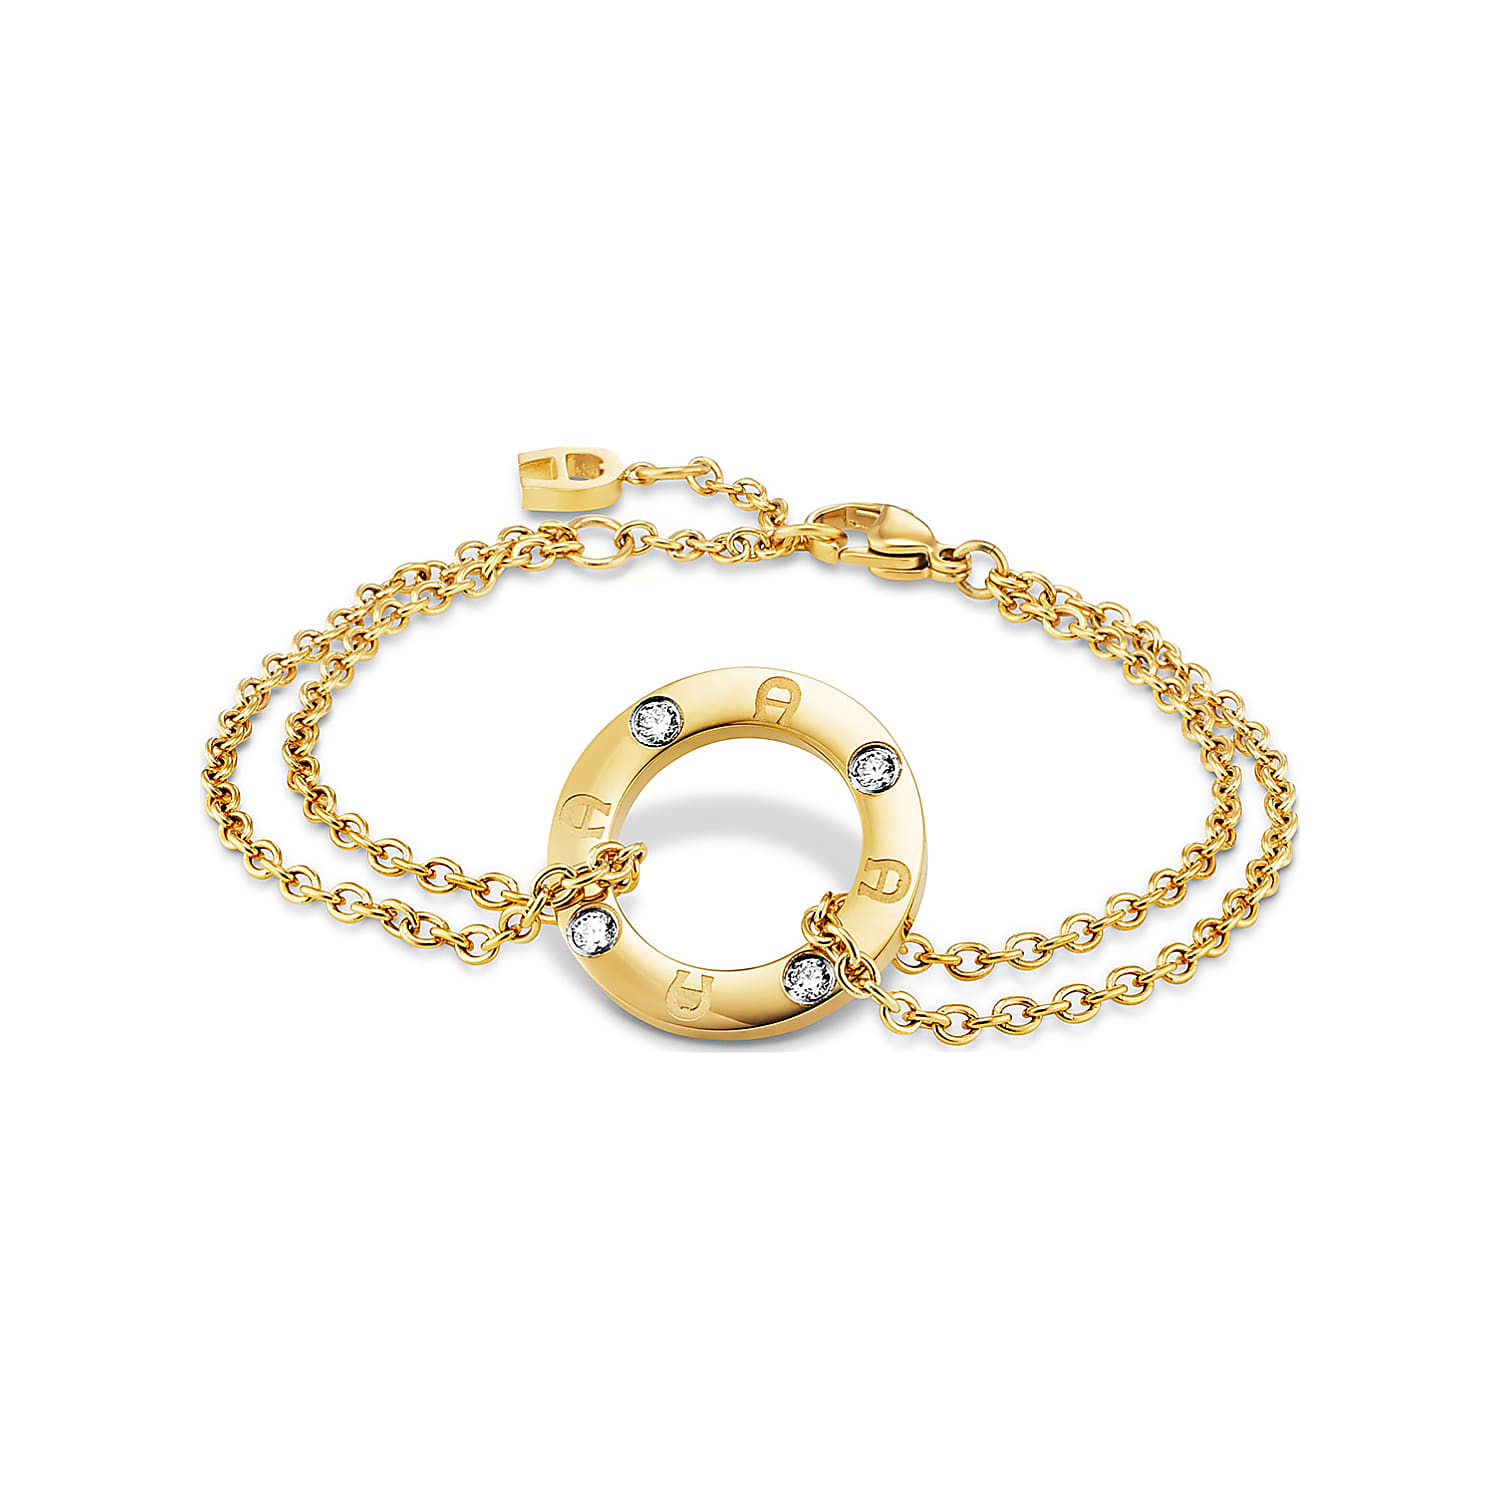 Bracelet with ring pendant